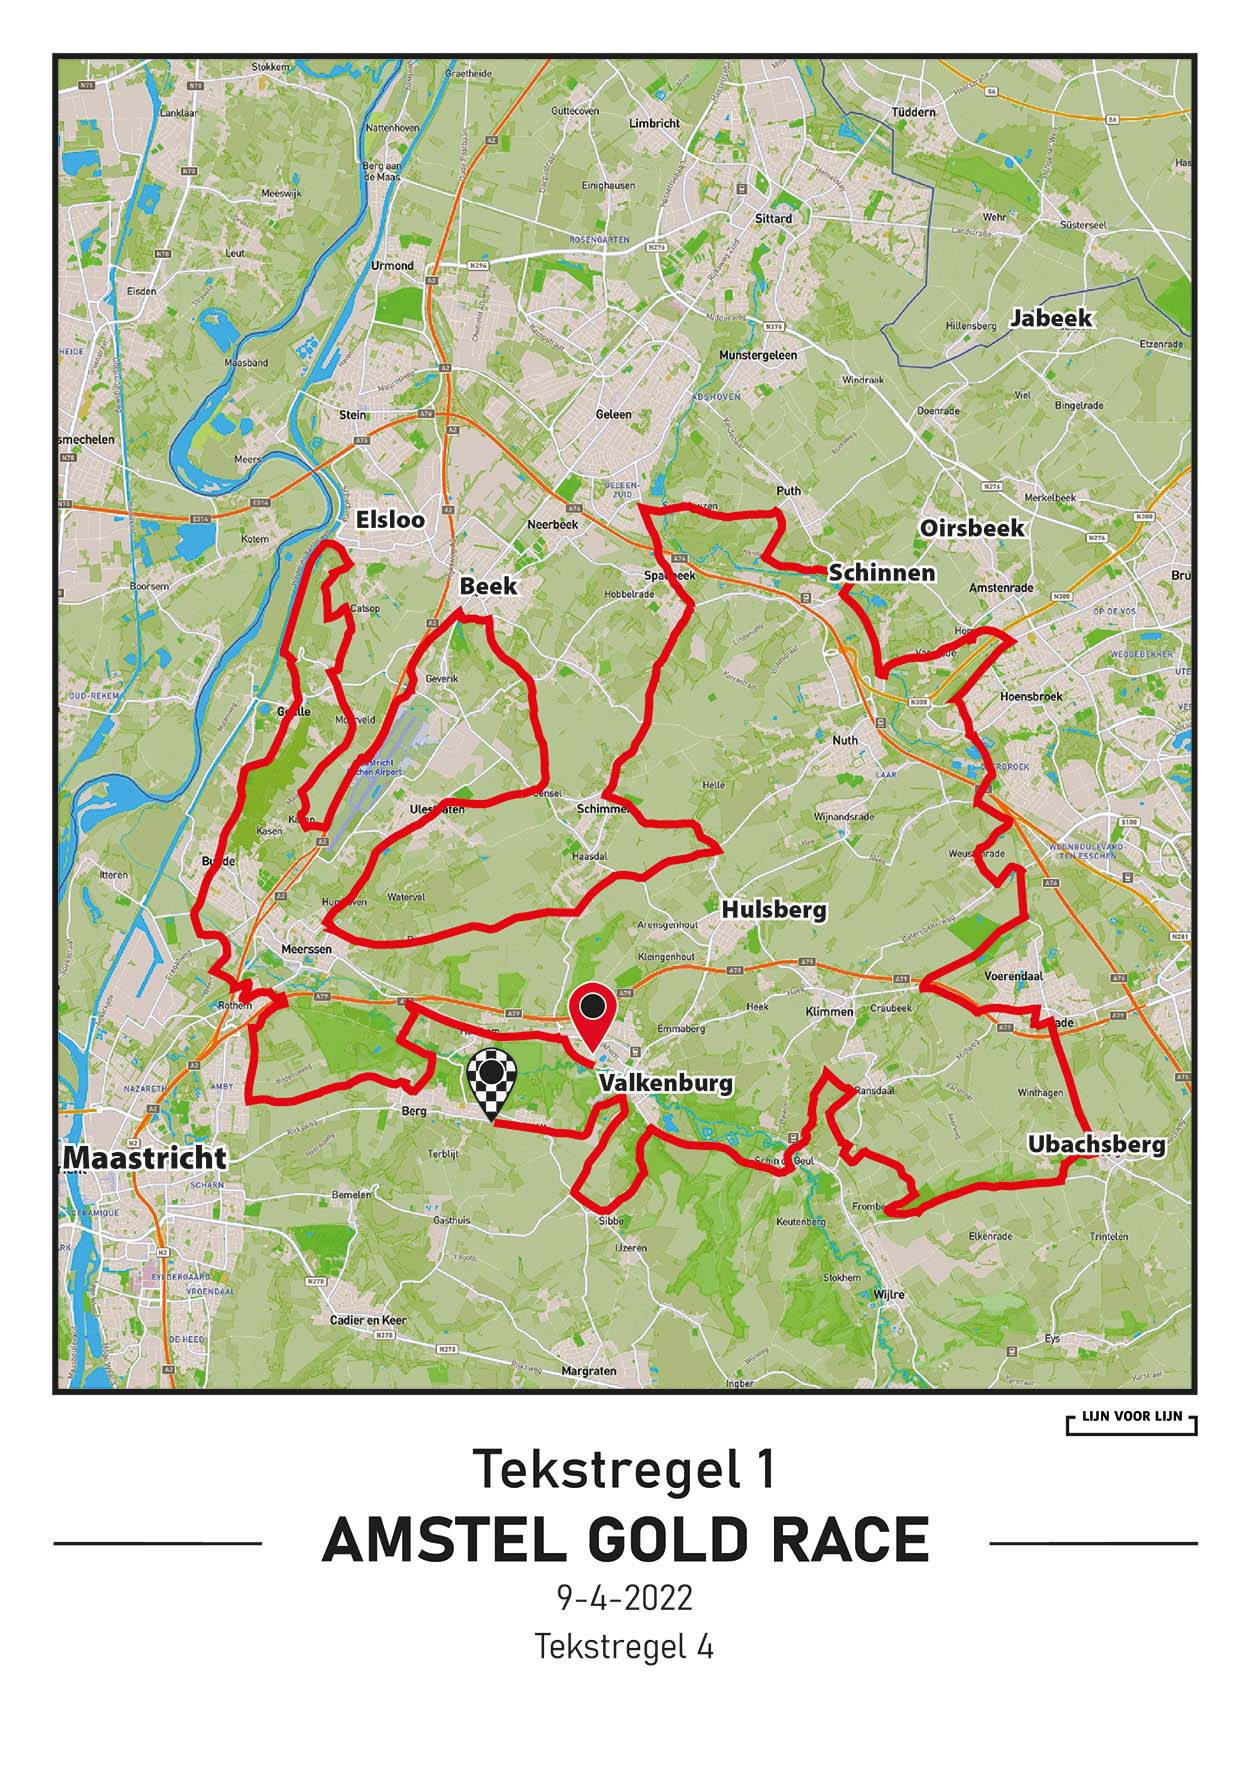 Amstel Gold Race 100km, 2022